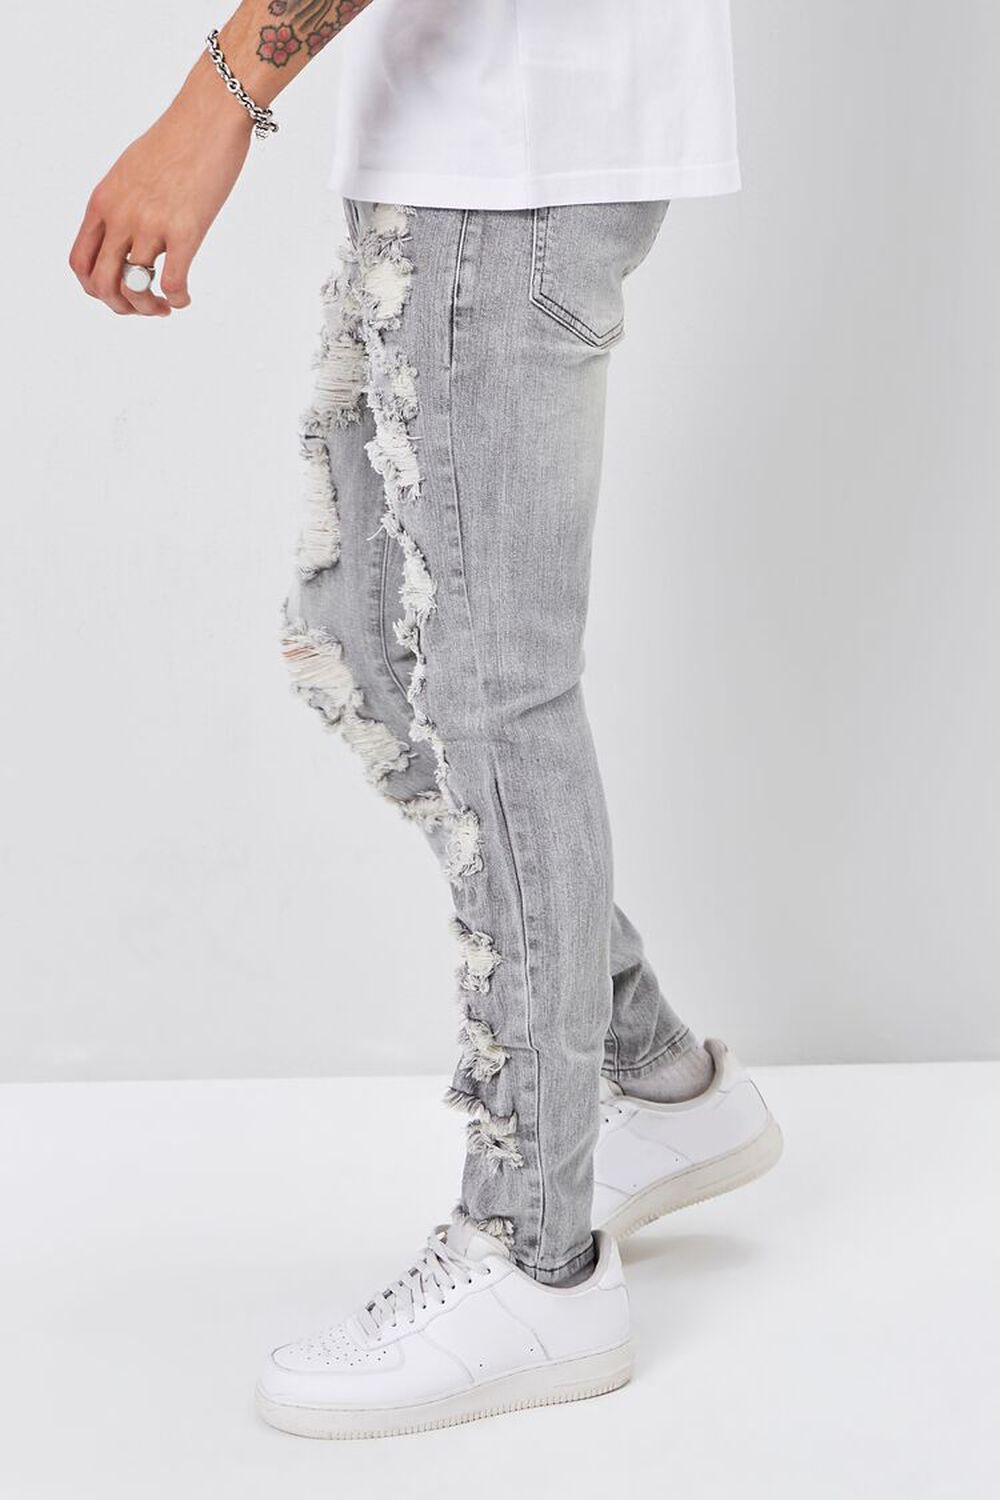 GREY Distressed Skinny Jeans, image 3